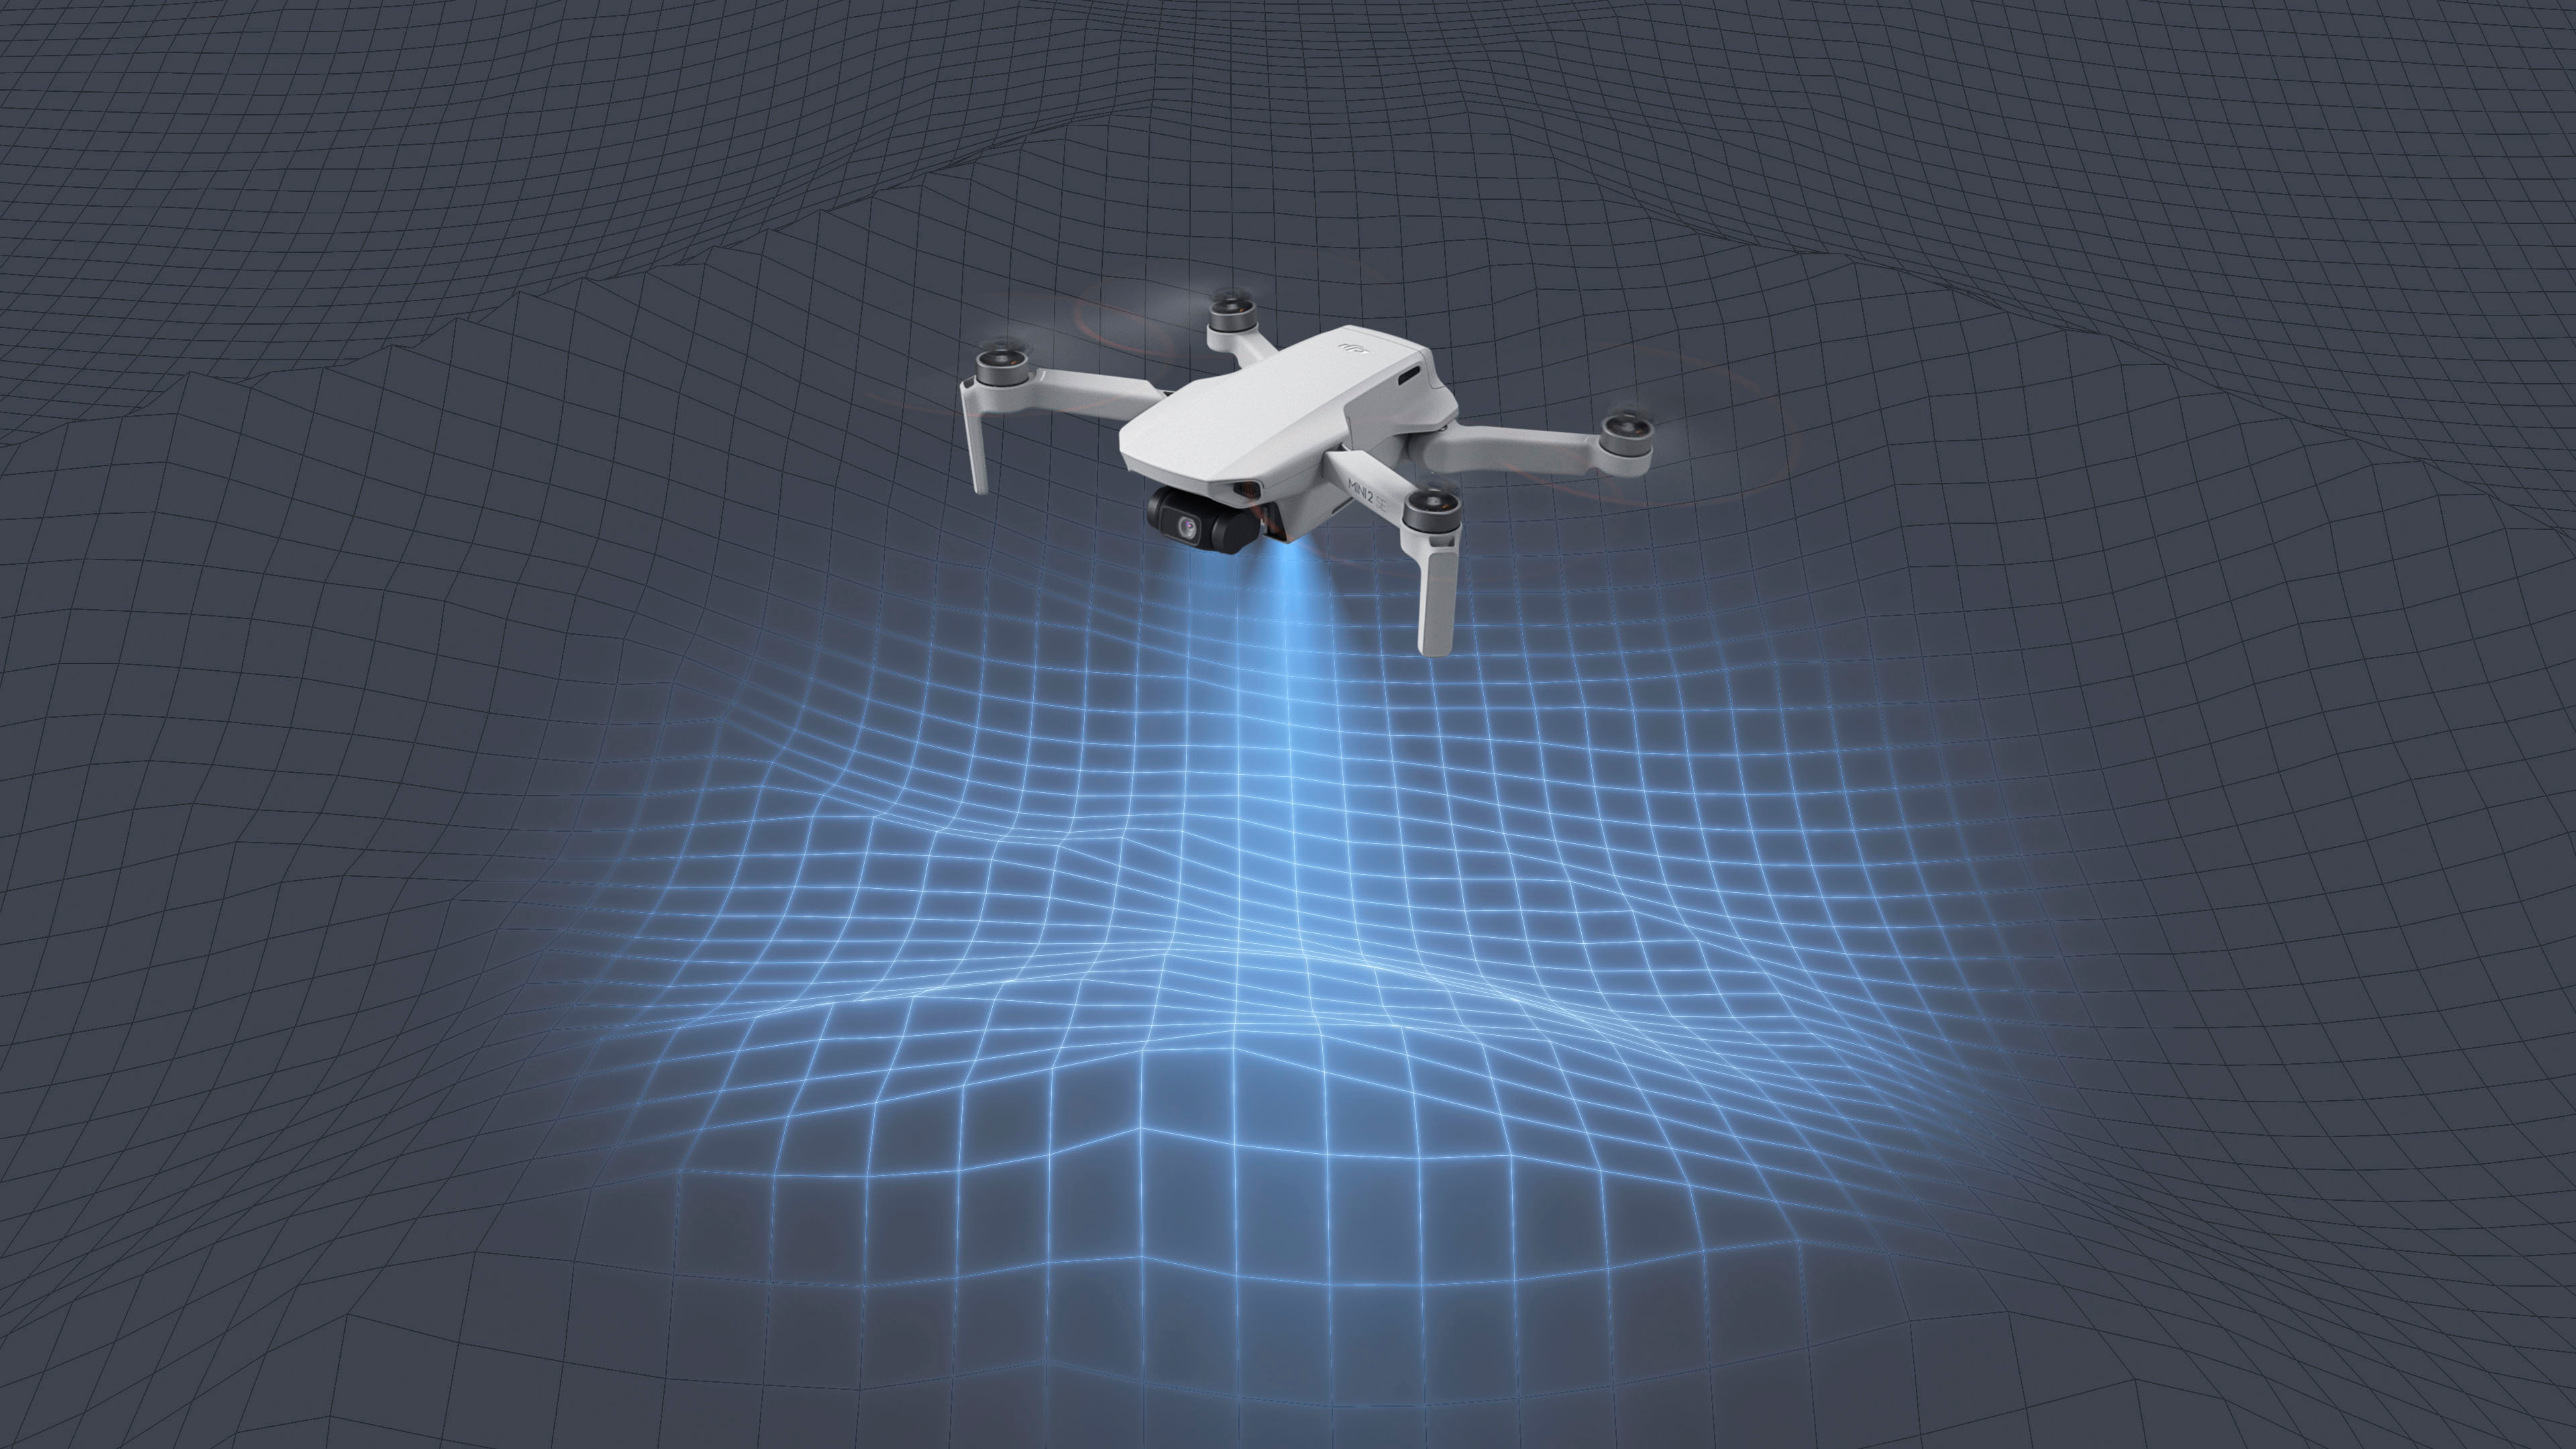 DJI Mini 2 SE Drone with Remote Control Gray CP.MA.00000573.01 - Best Buy